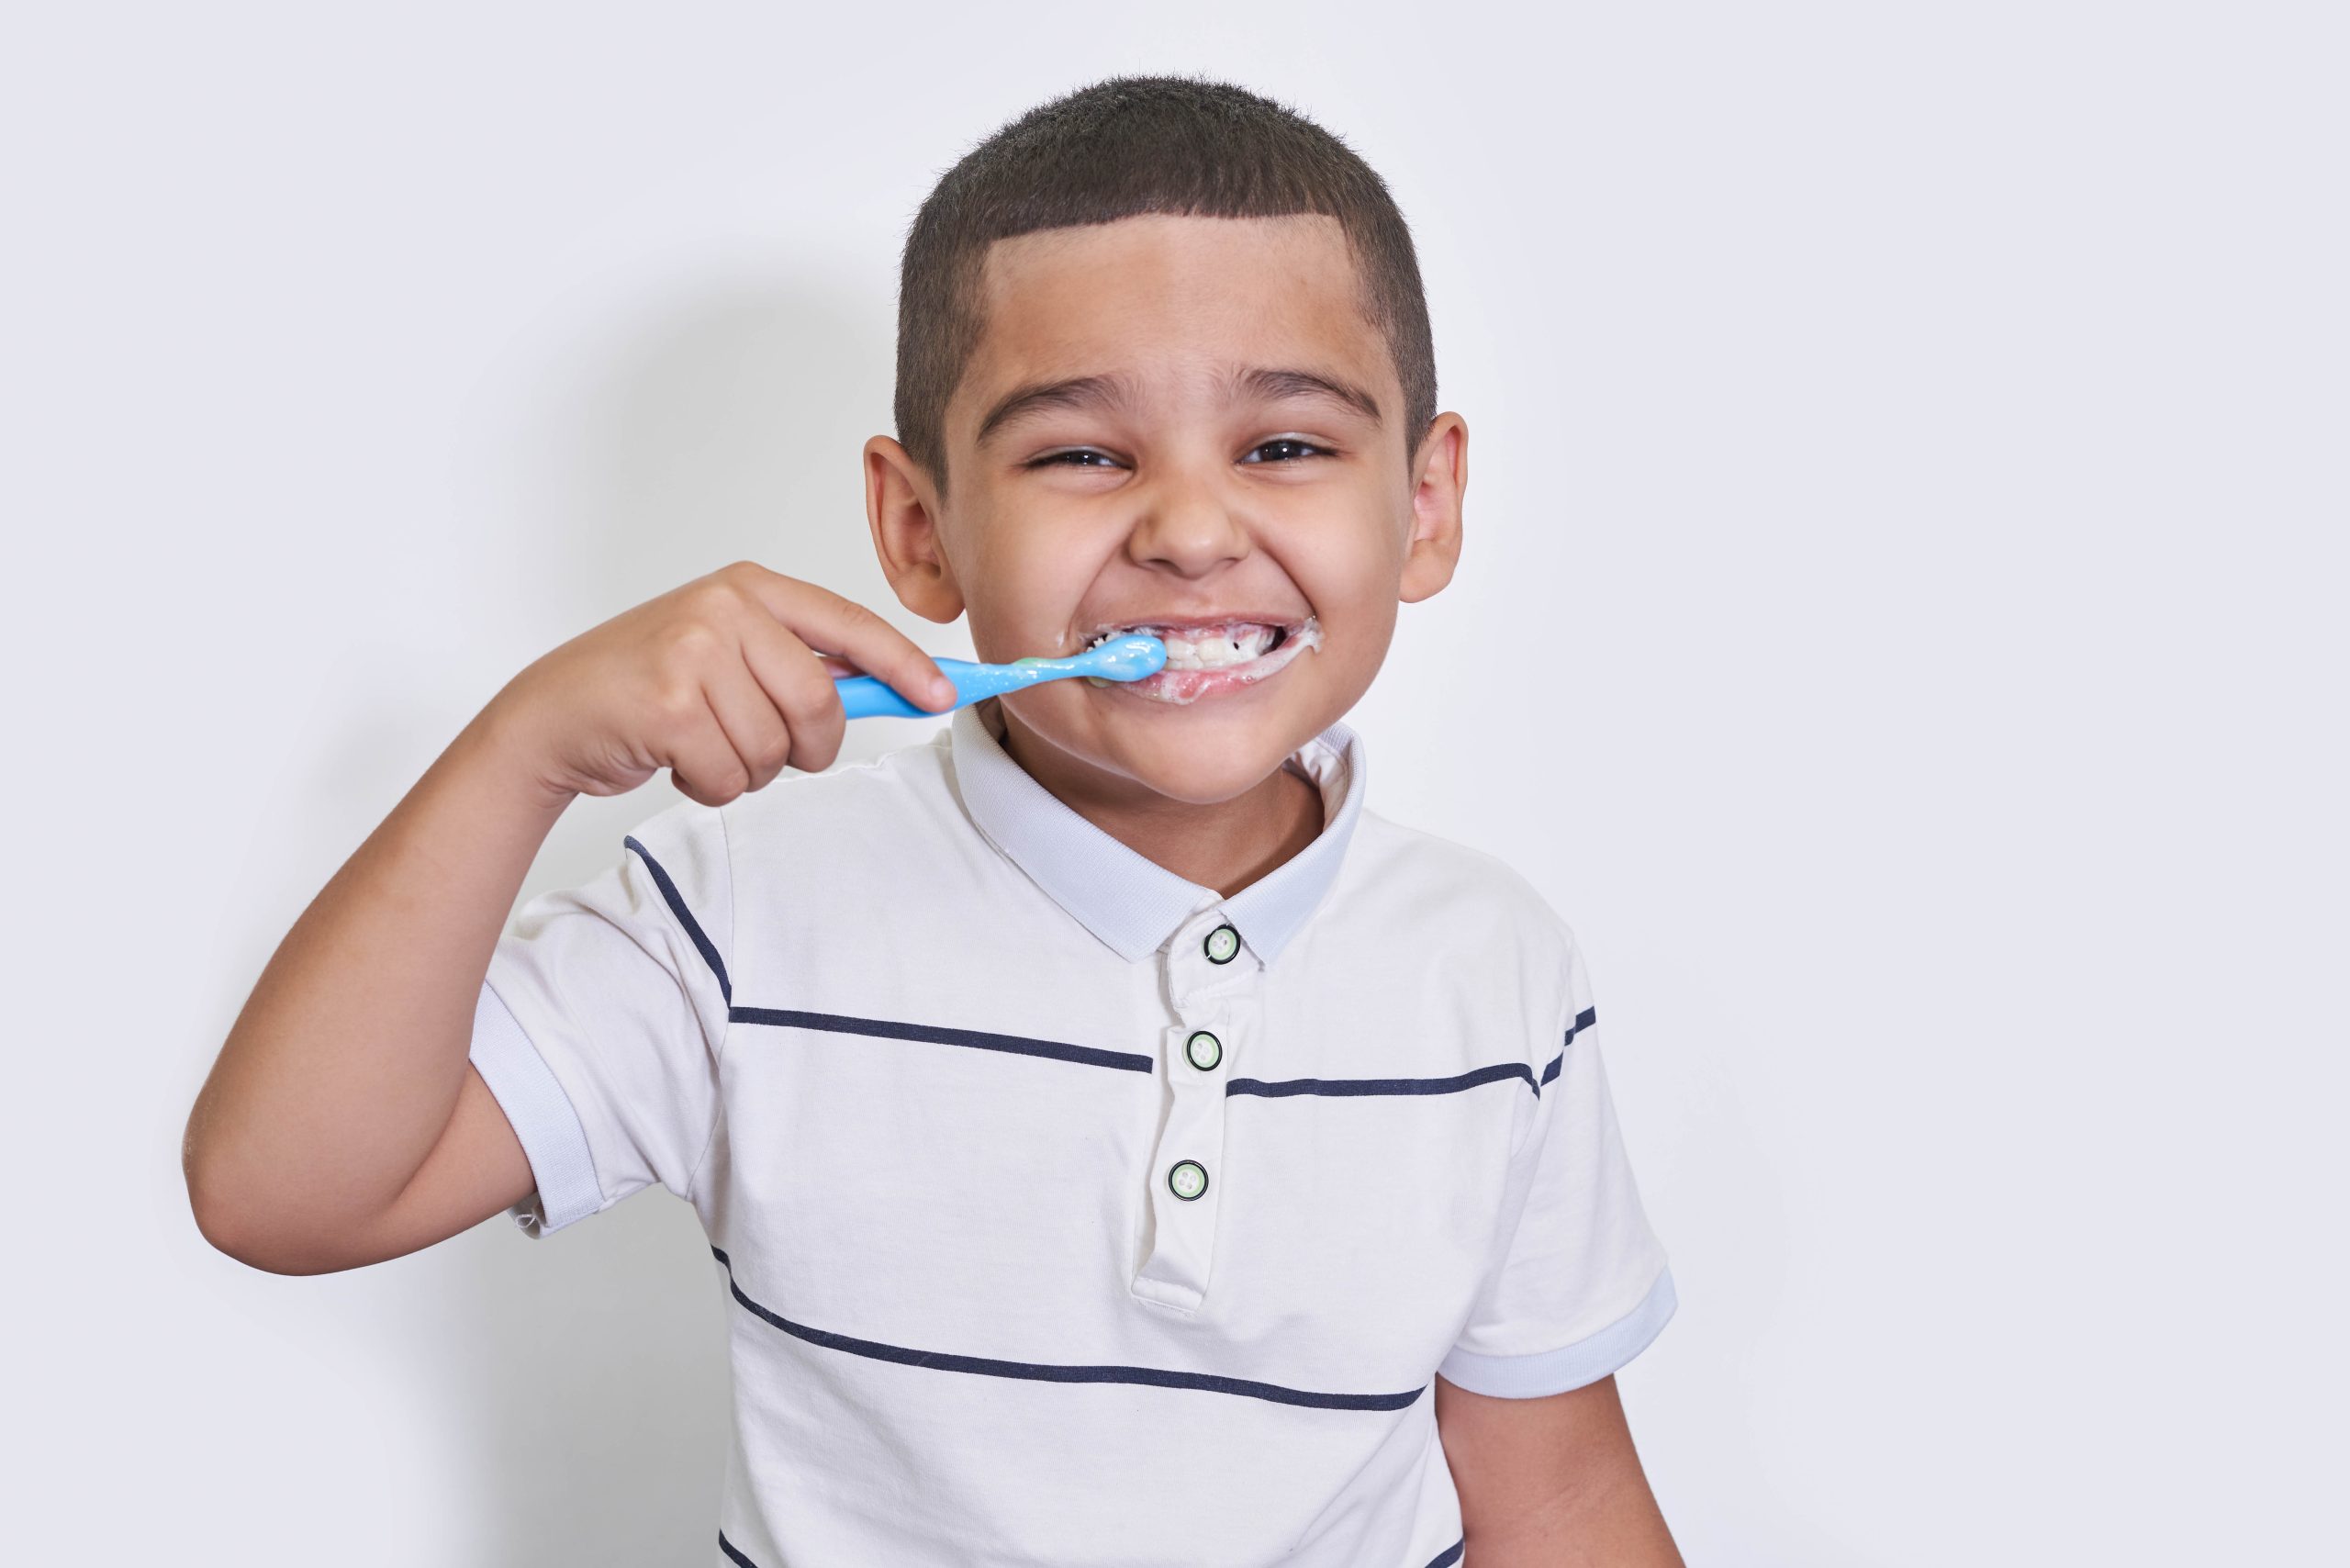 Tooth Brushing - Positive Dental